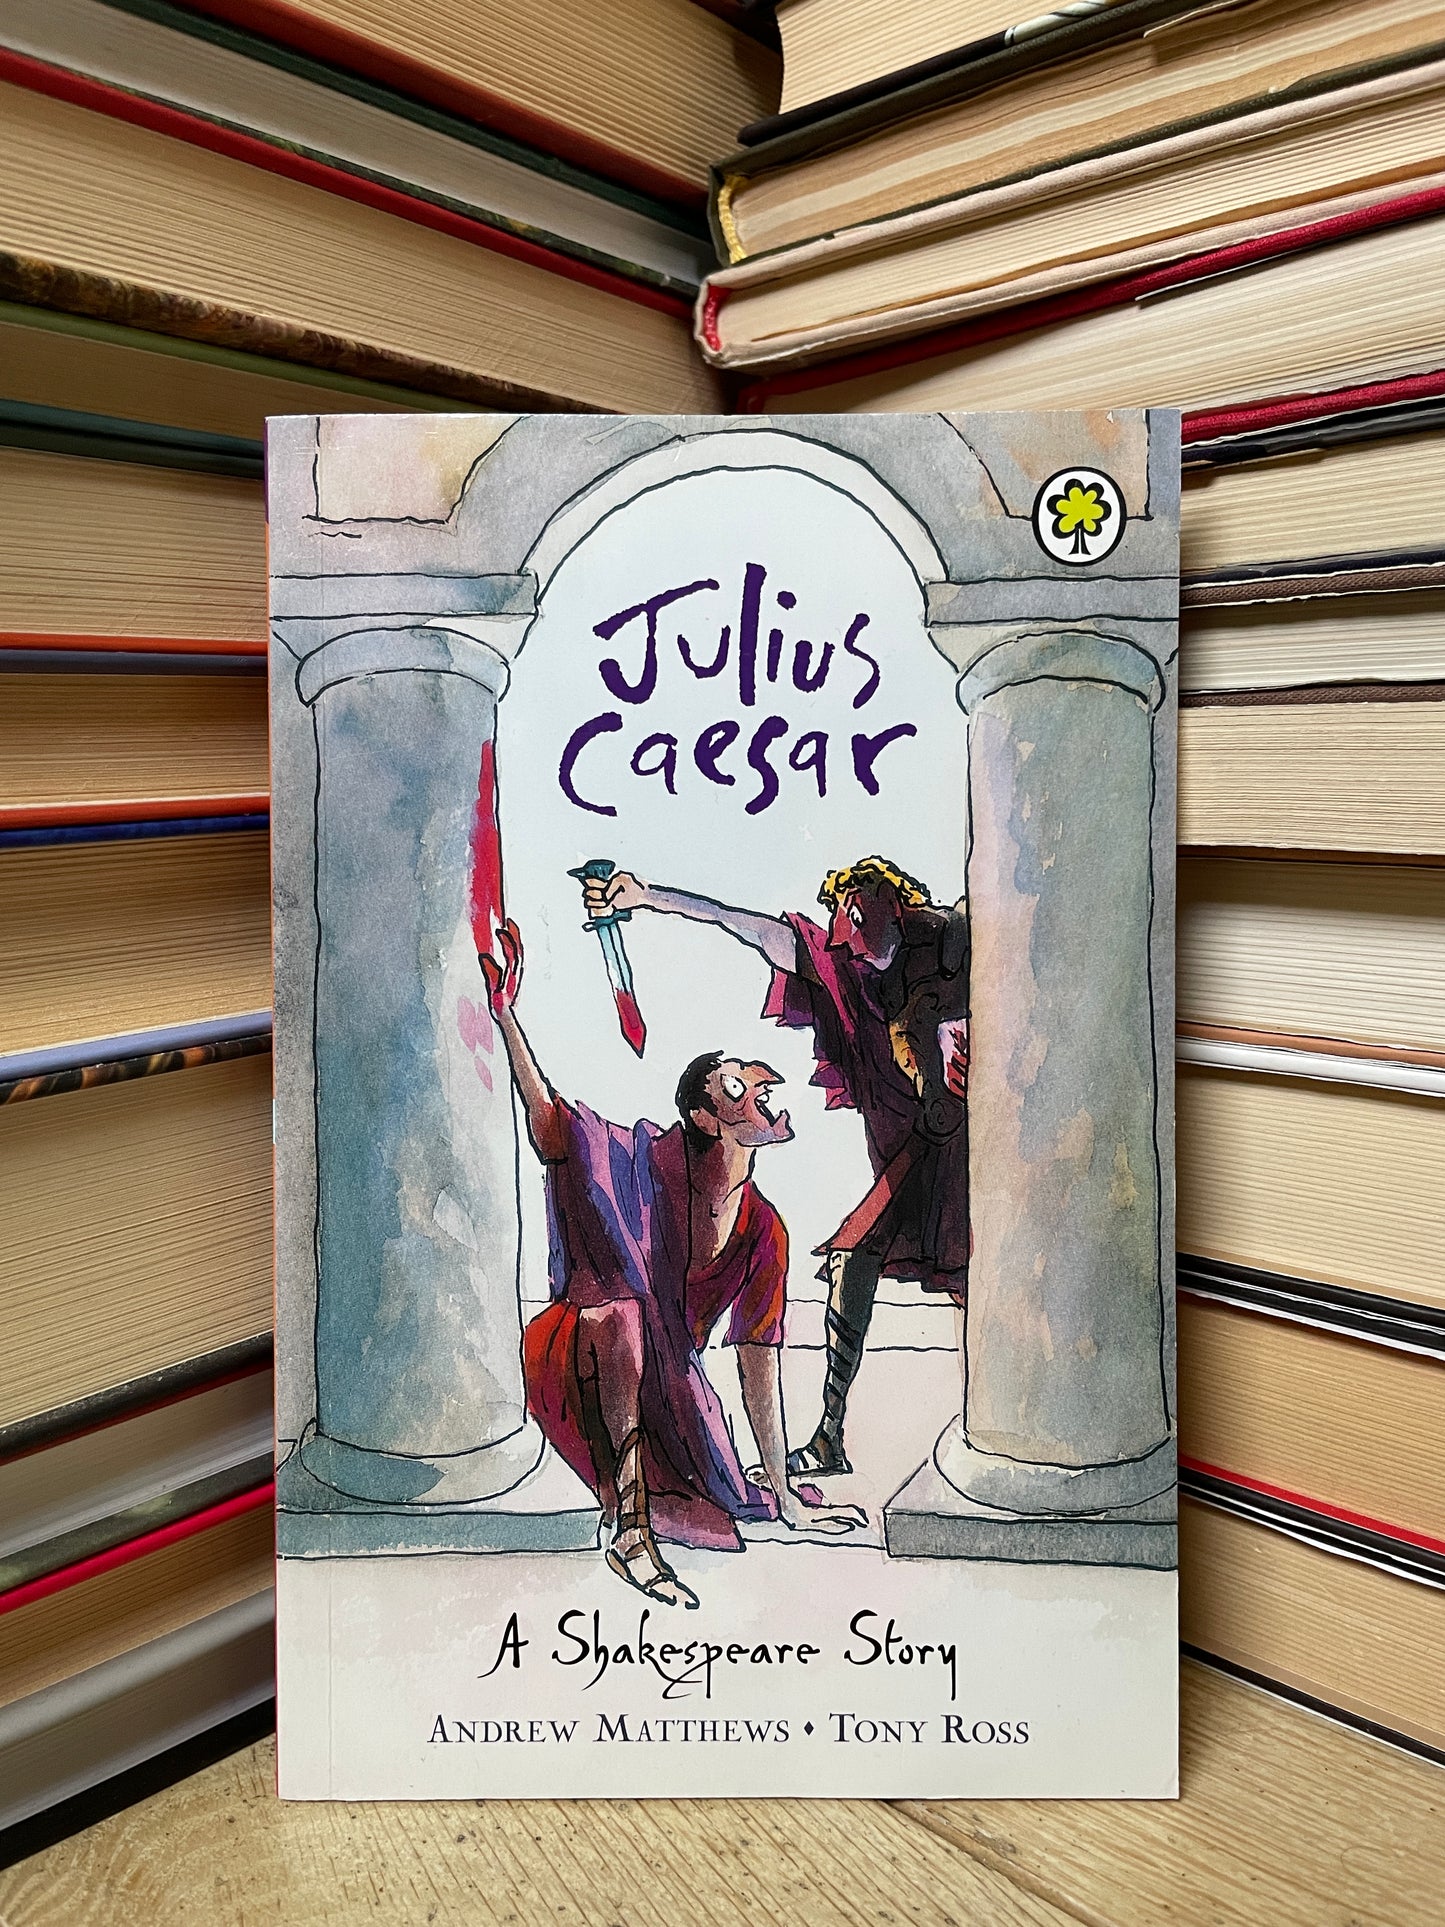 Andrew Matthews, Tony Ross - A Shakespeare Story: Julius Caesar